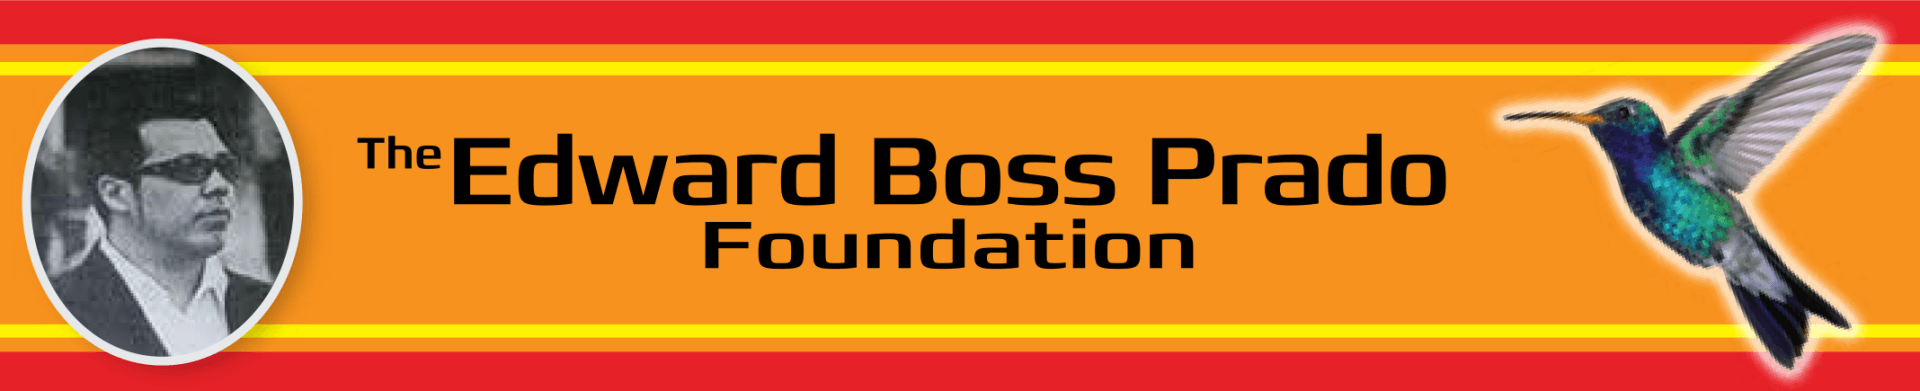 Edward Boss Prado logo